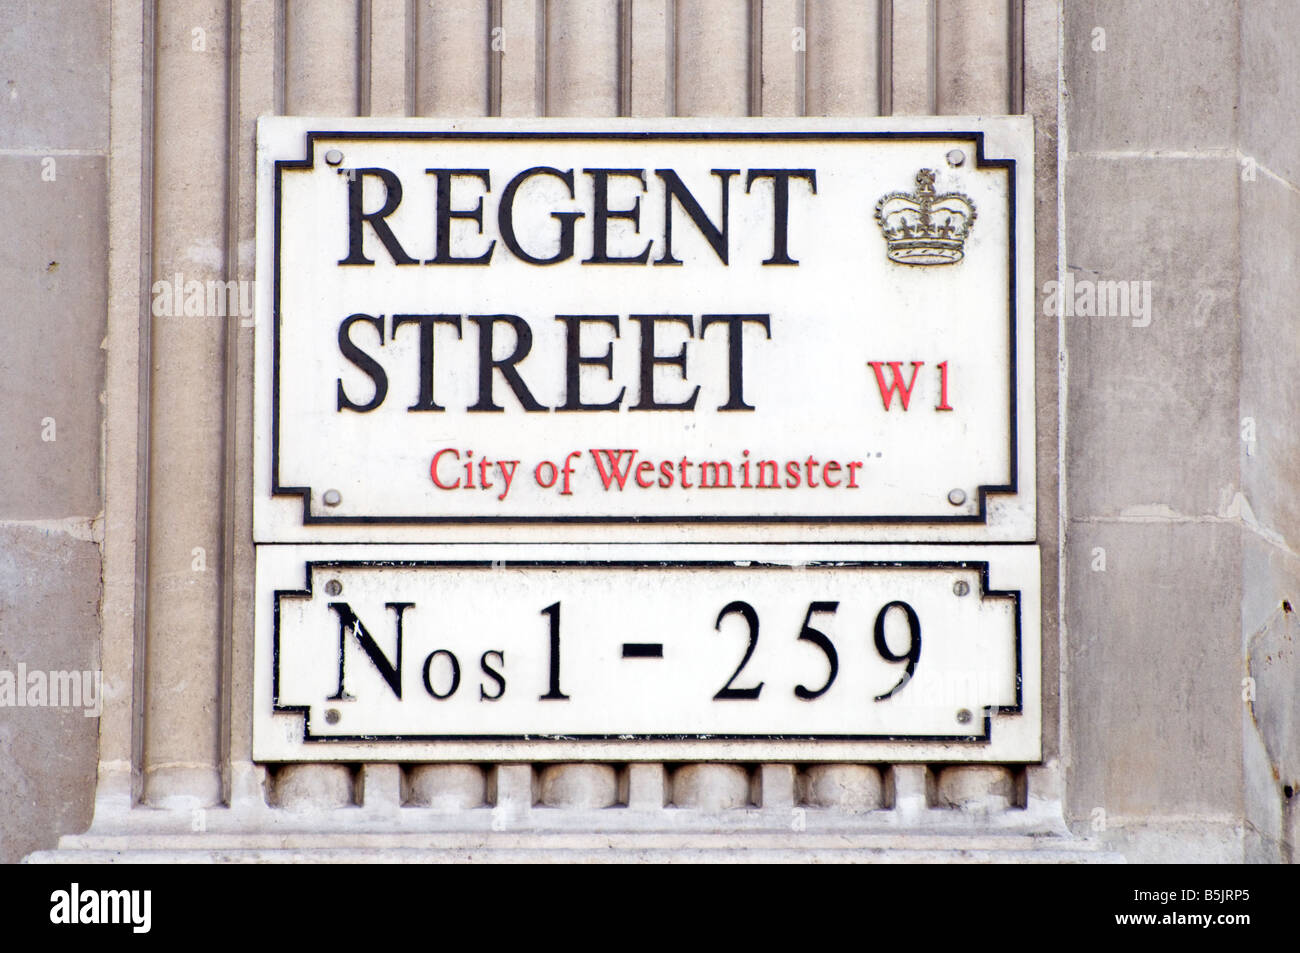 Regent street sign London England UK Stock Photo